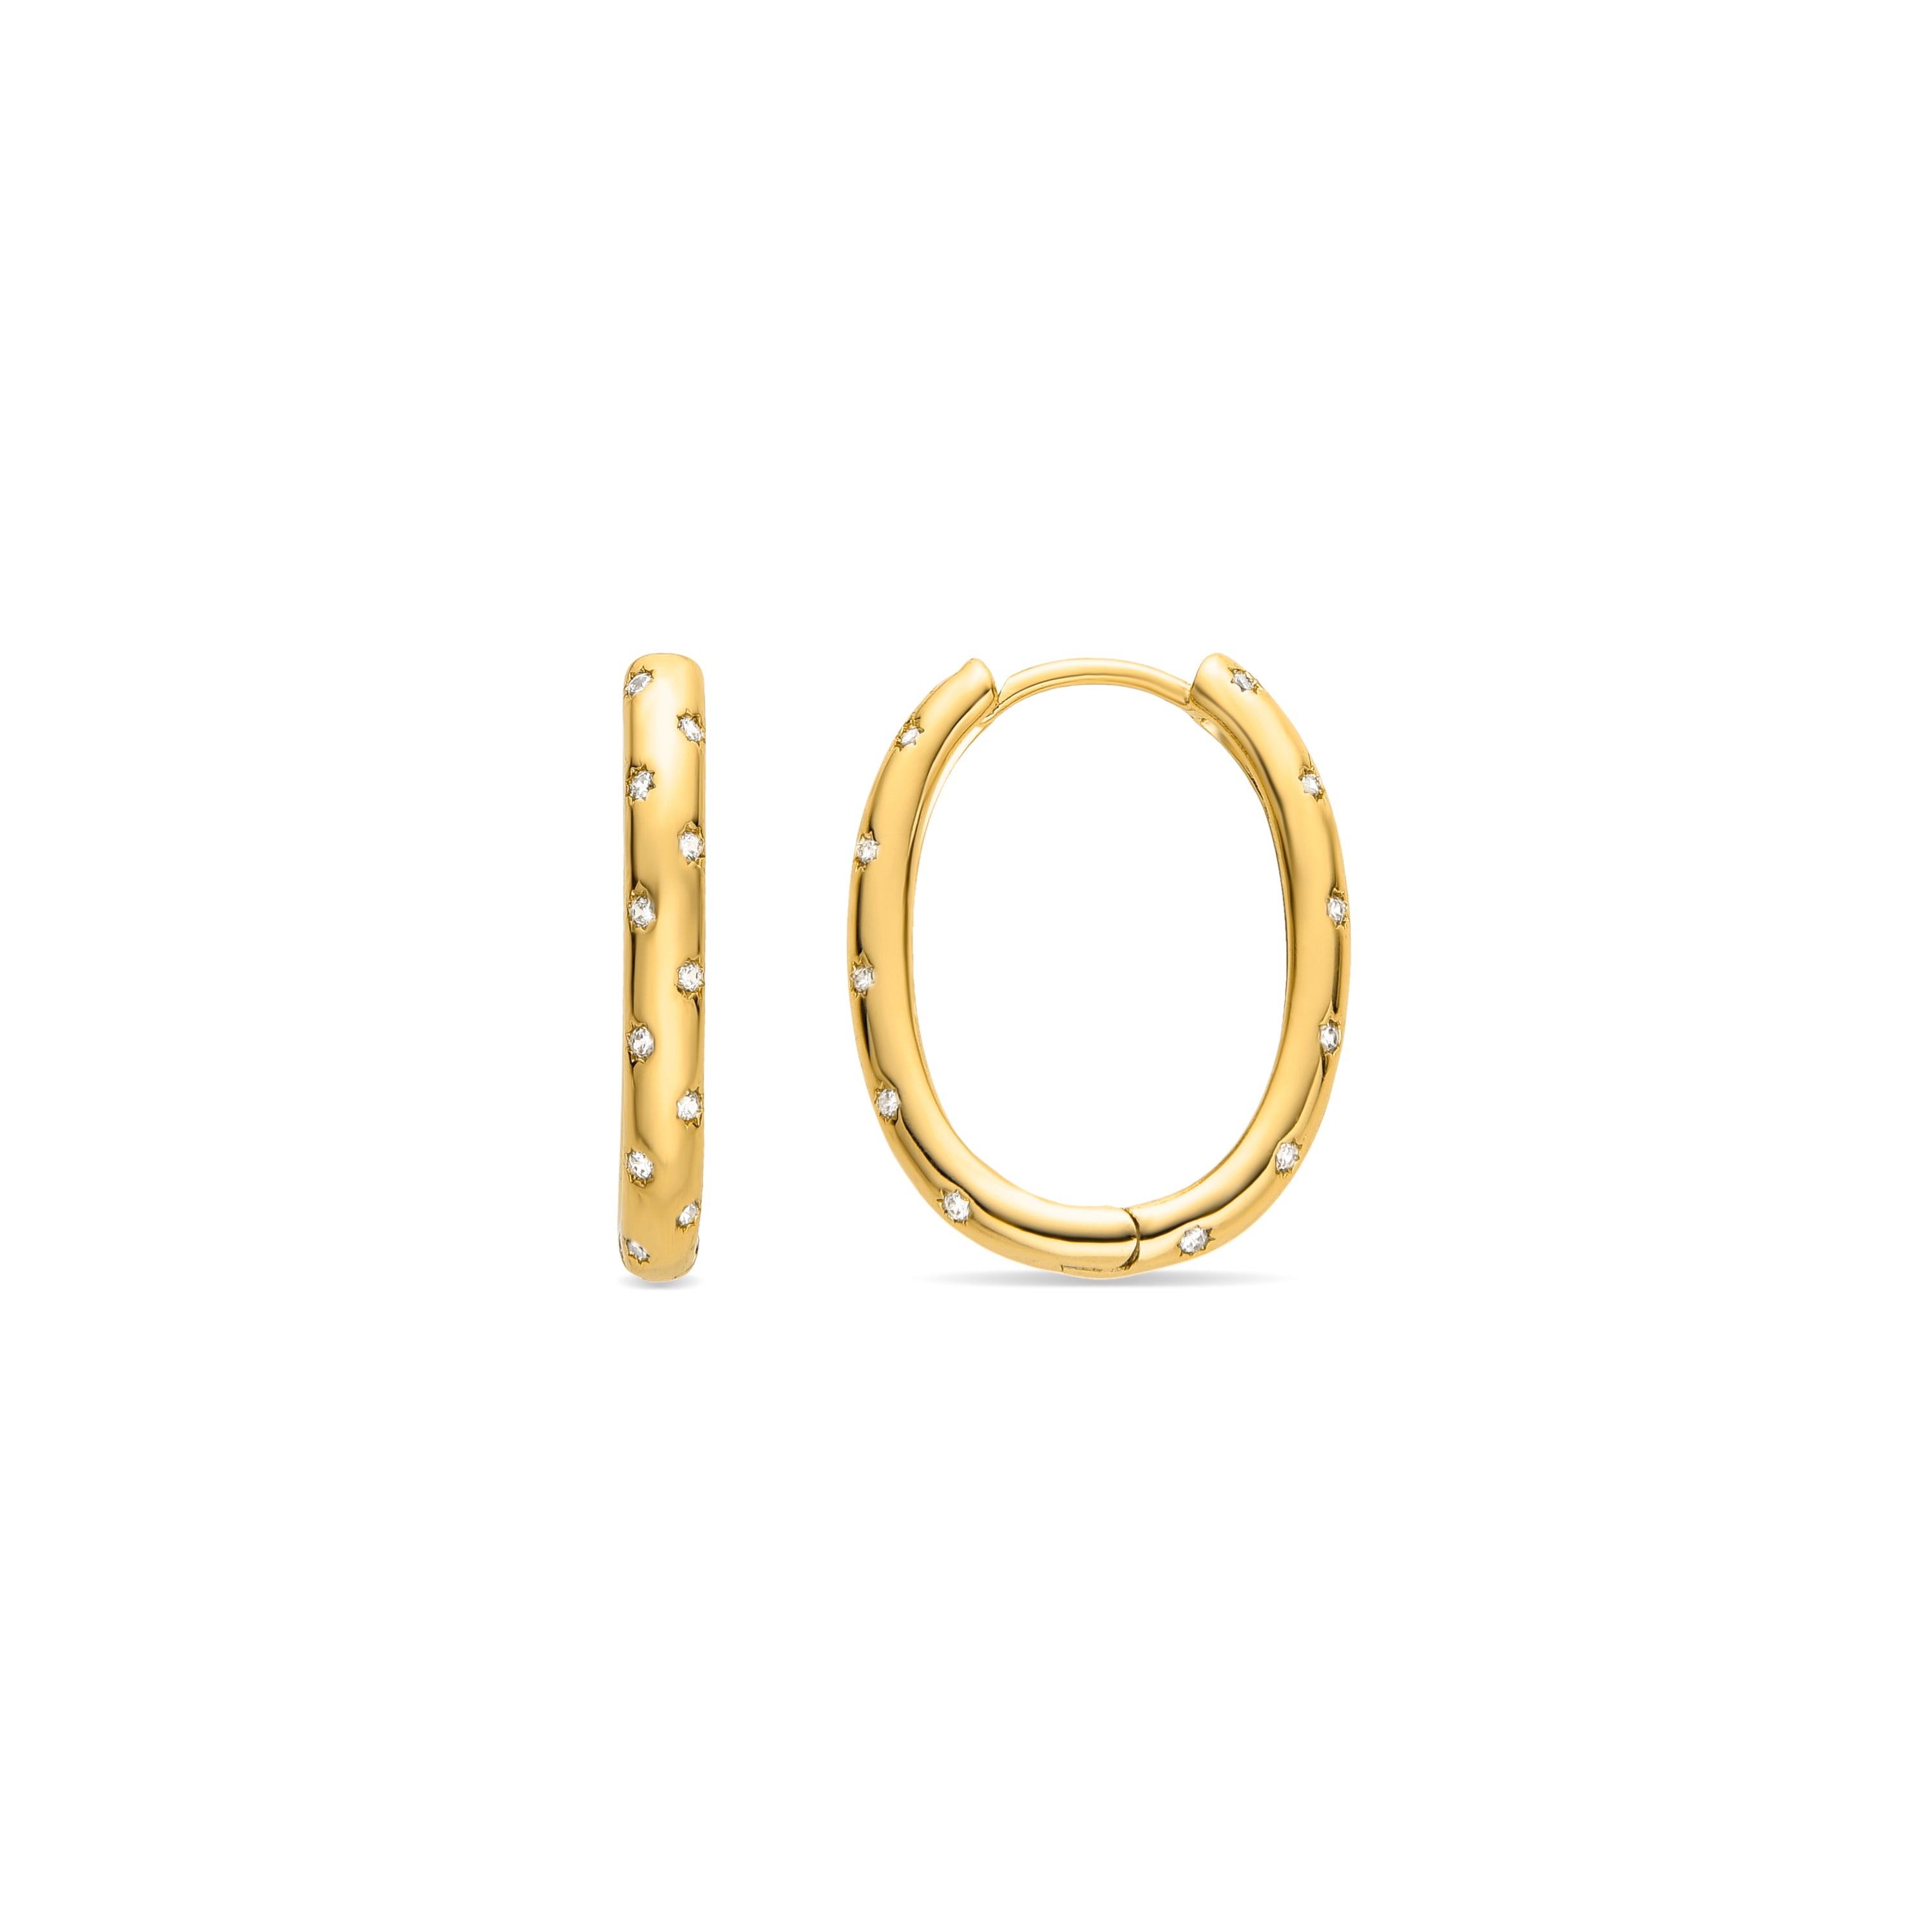 Ikrul earrings 18k yellow gold finish